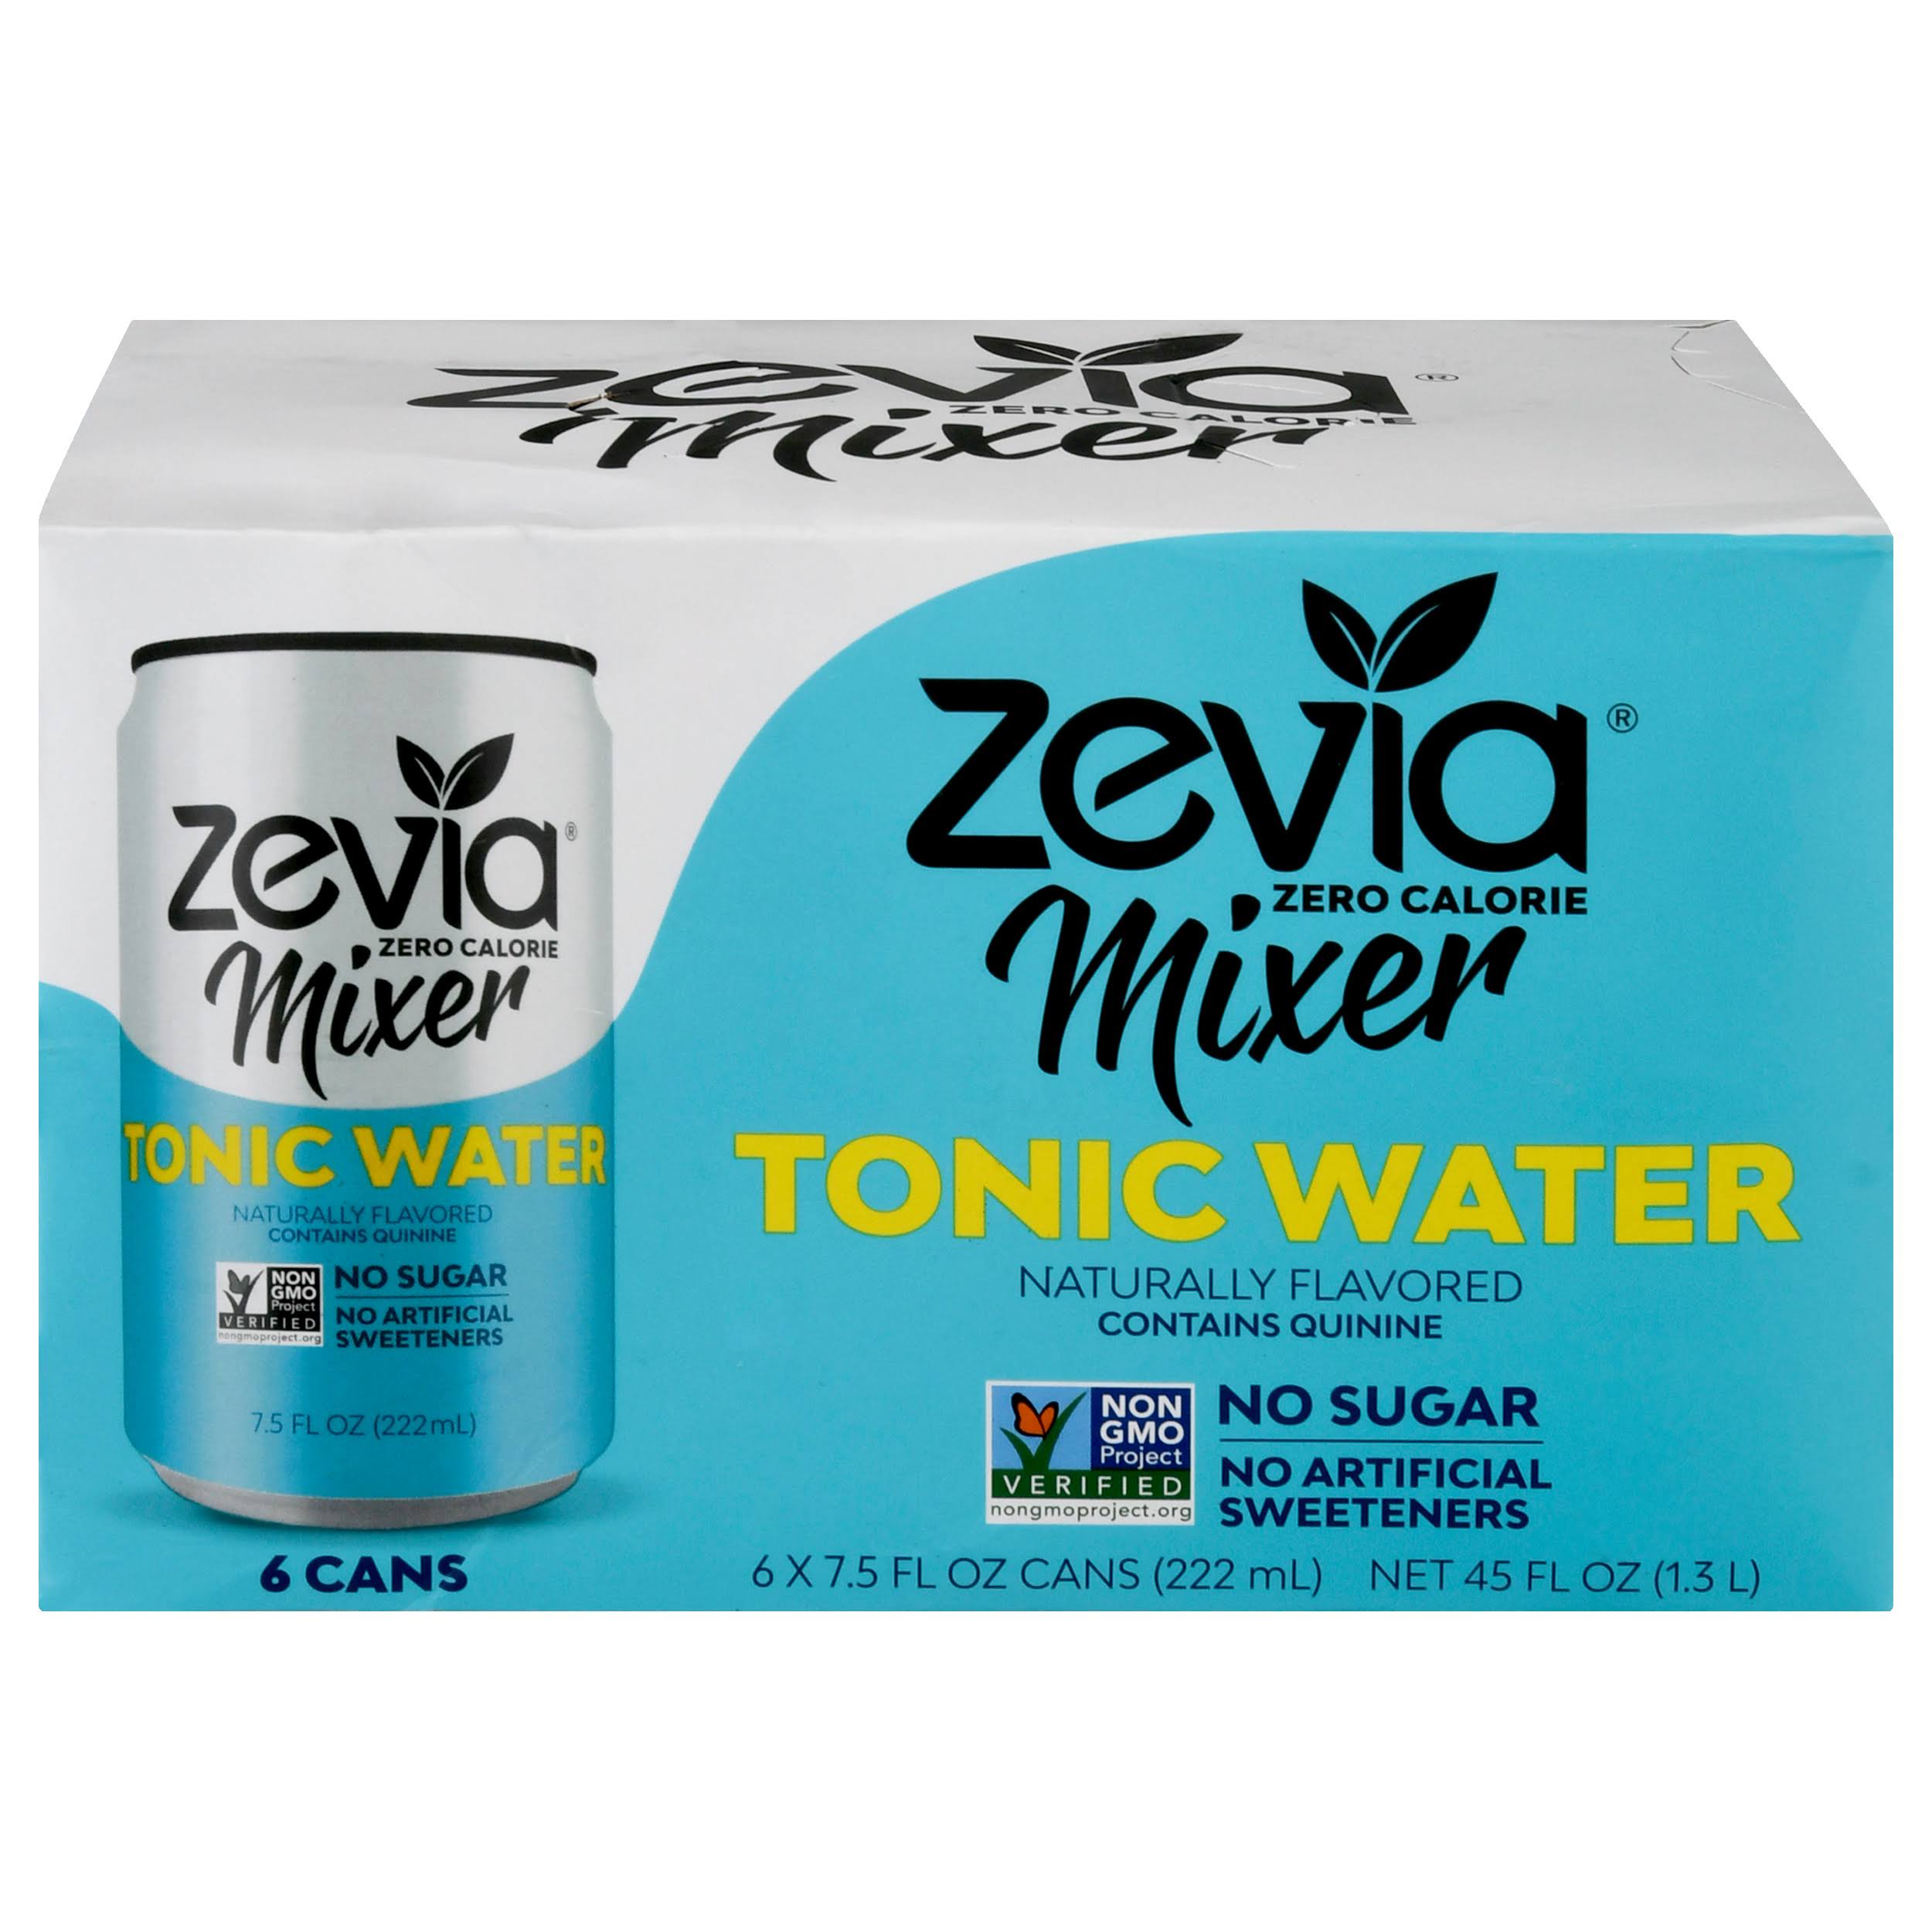 Zevia Mixer Tonic Water, Zero Calorie - 6 pack, 7.5 fl oz cans